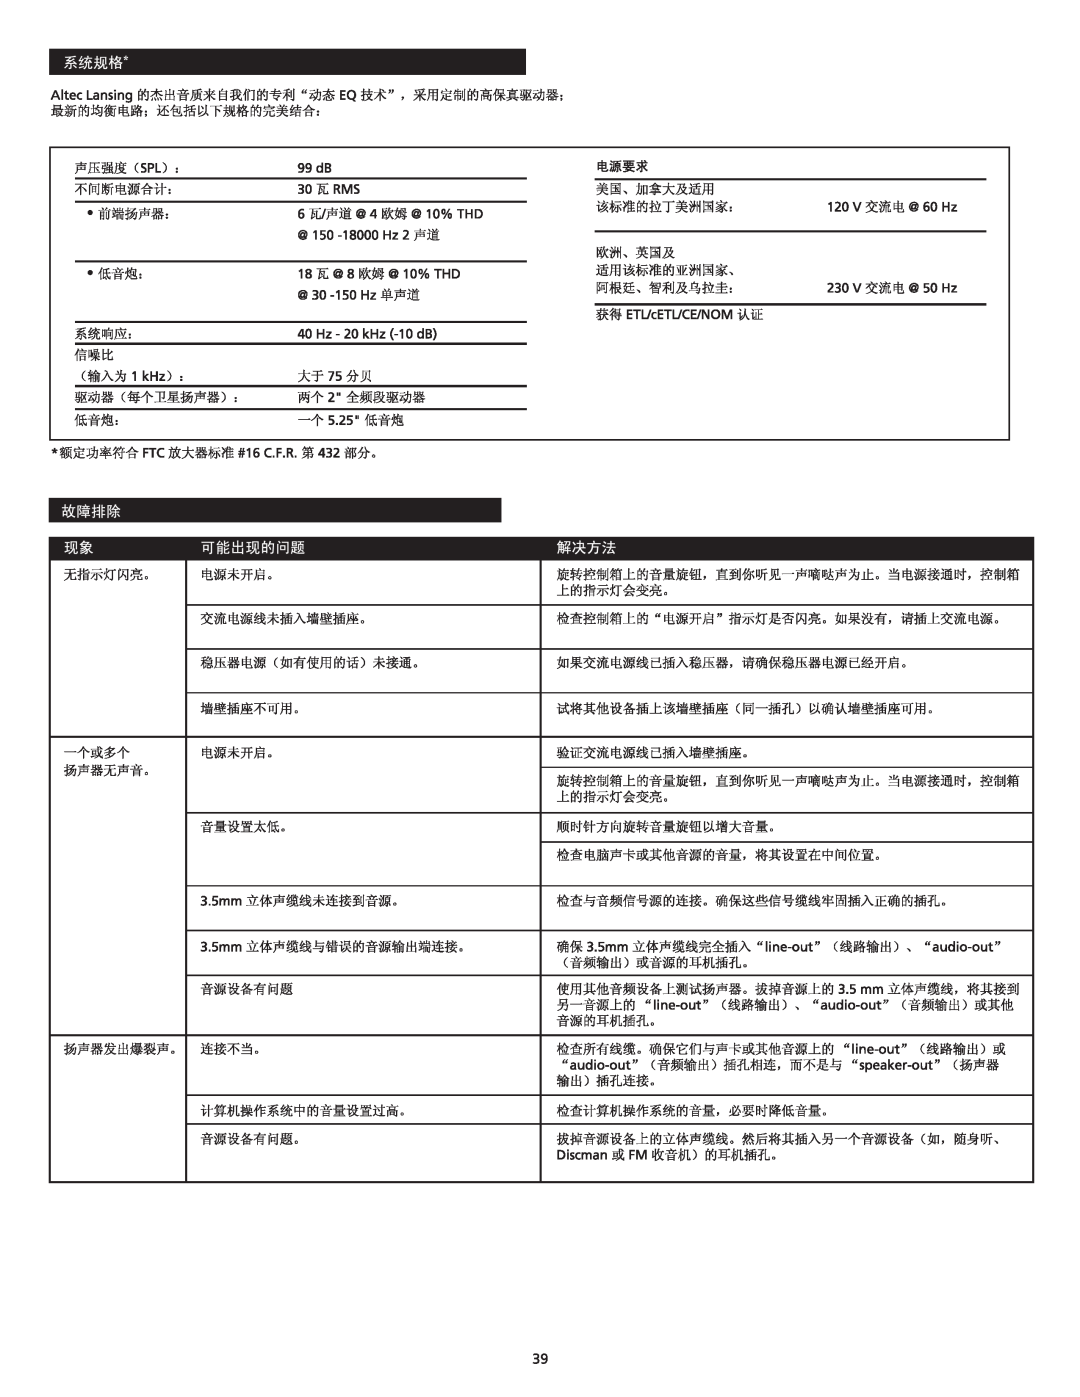 Altec Lansing VS3121 manual 